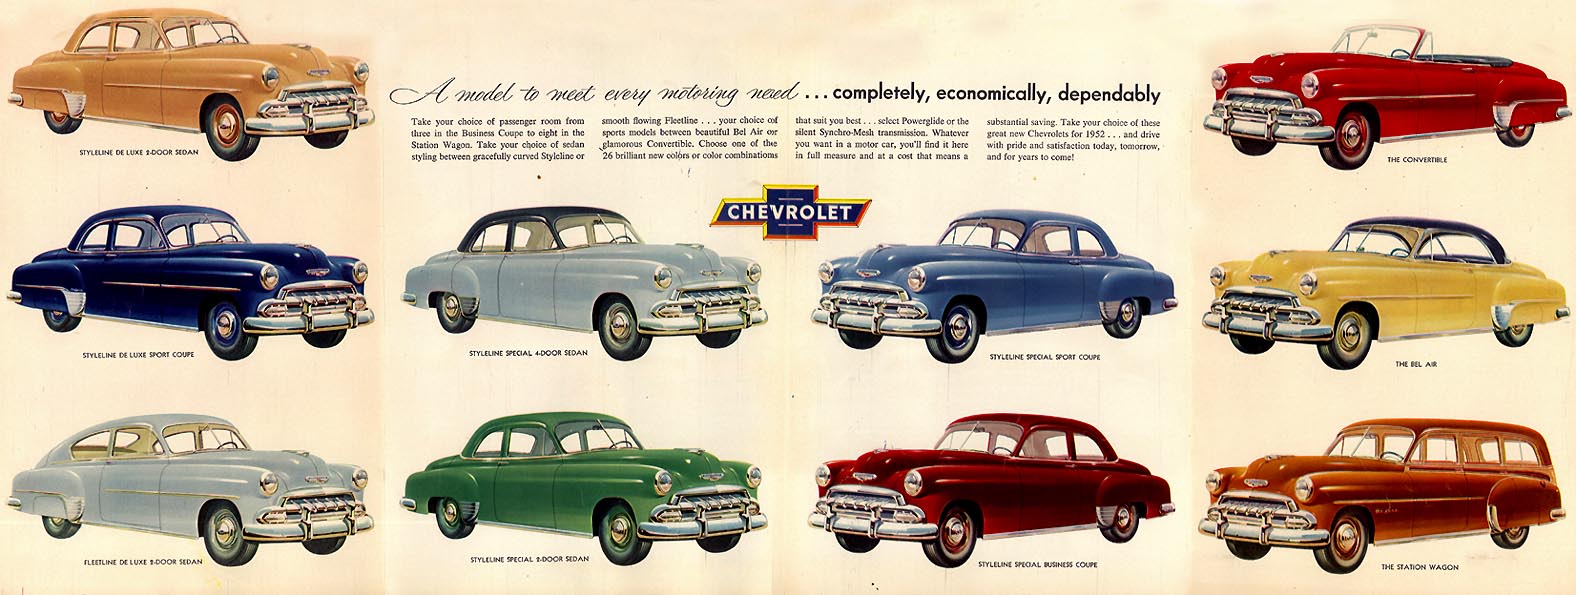 1952 Chevrolet-06